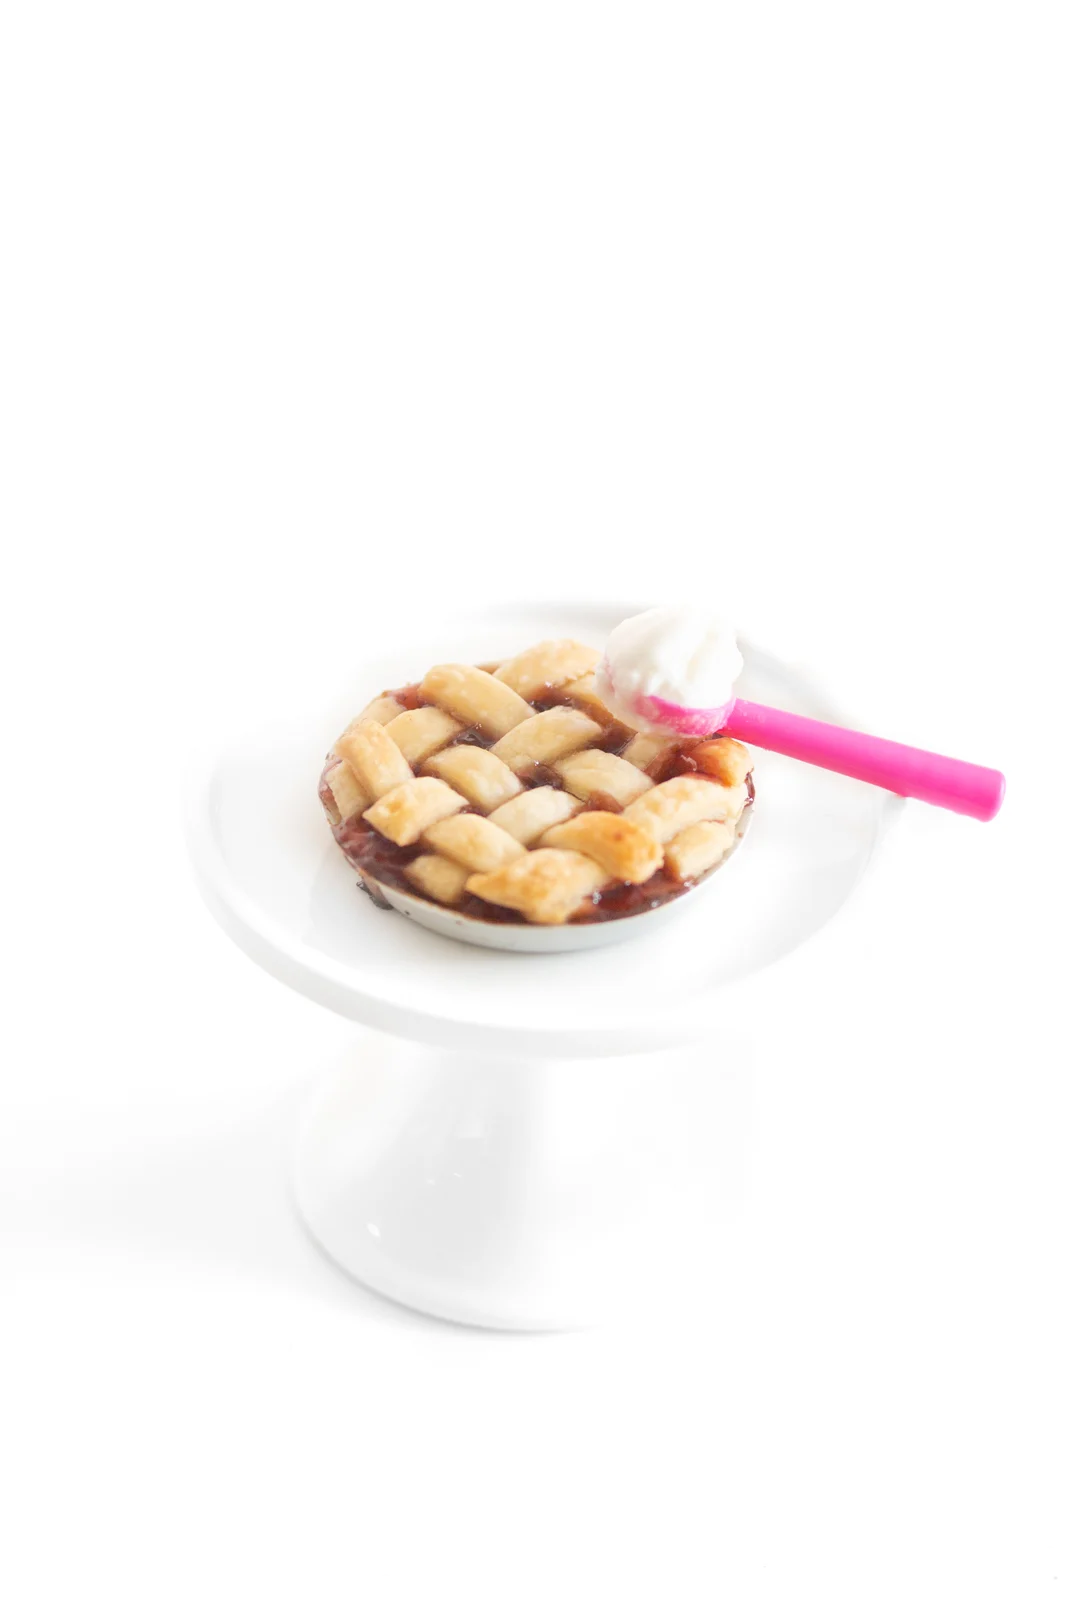 tiny lattice pie on a mini pedestal with a tiny pink ice cream scooper with vanilla ice cream on it